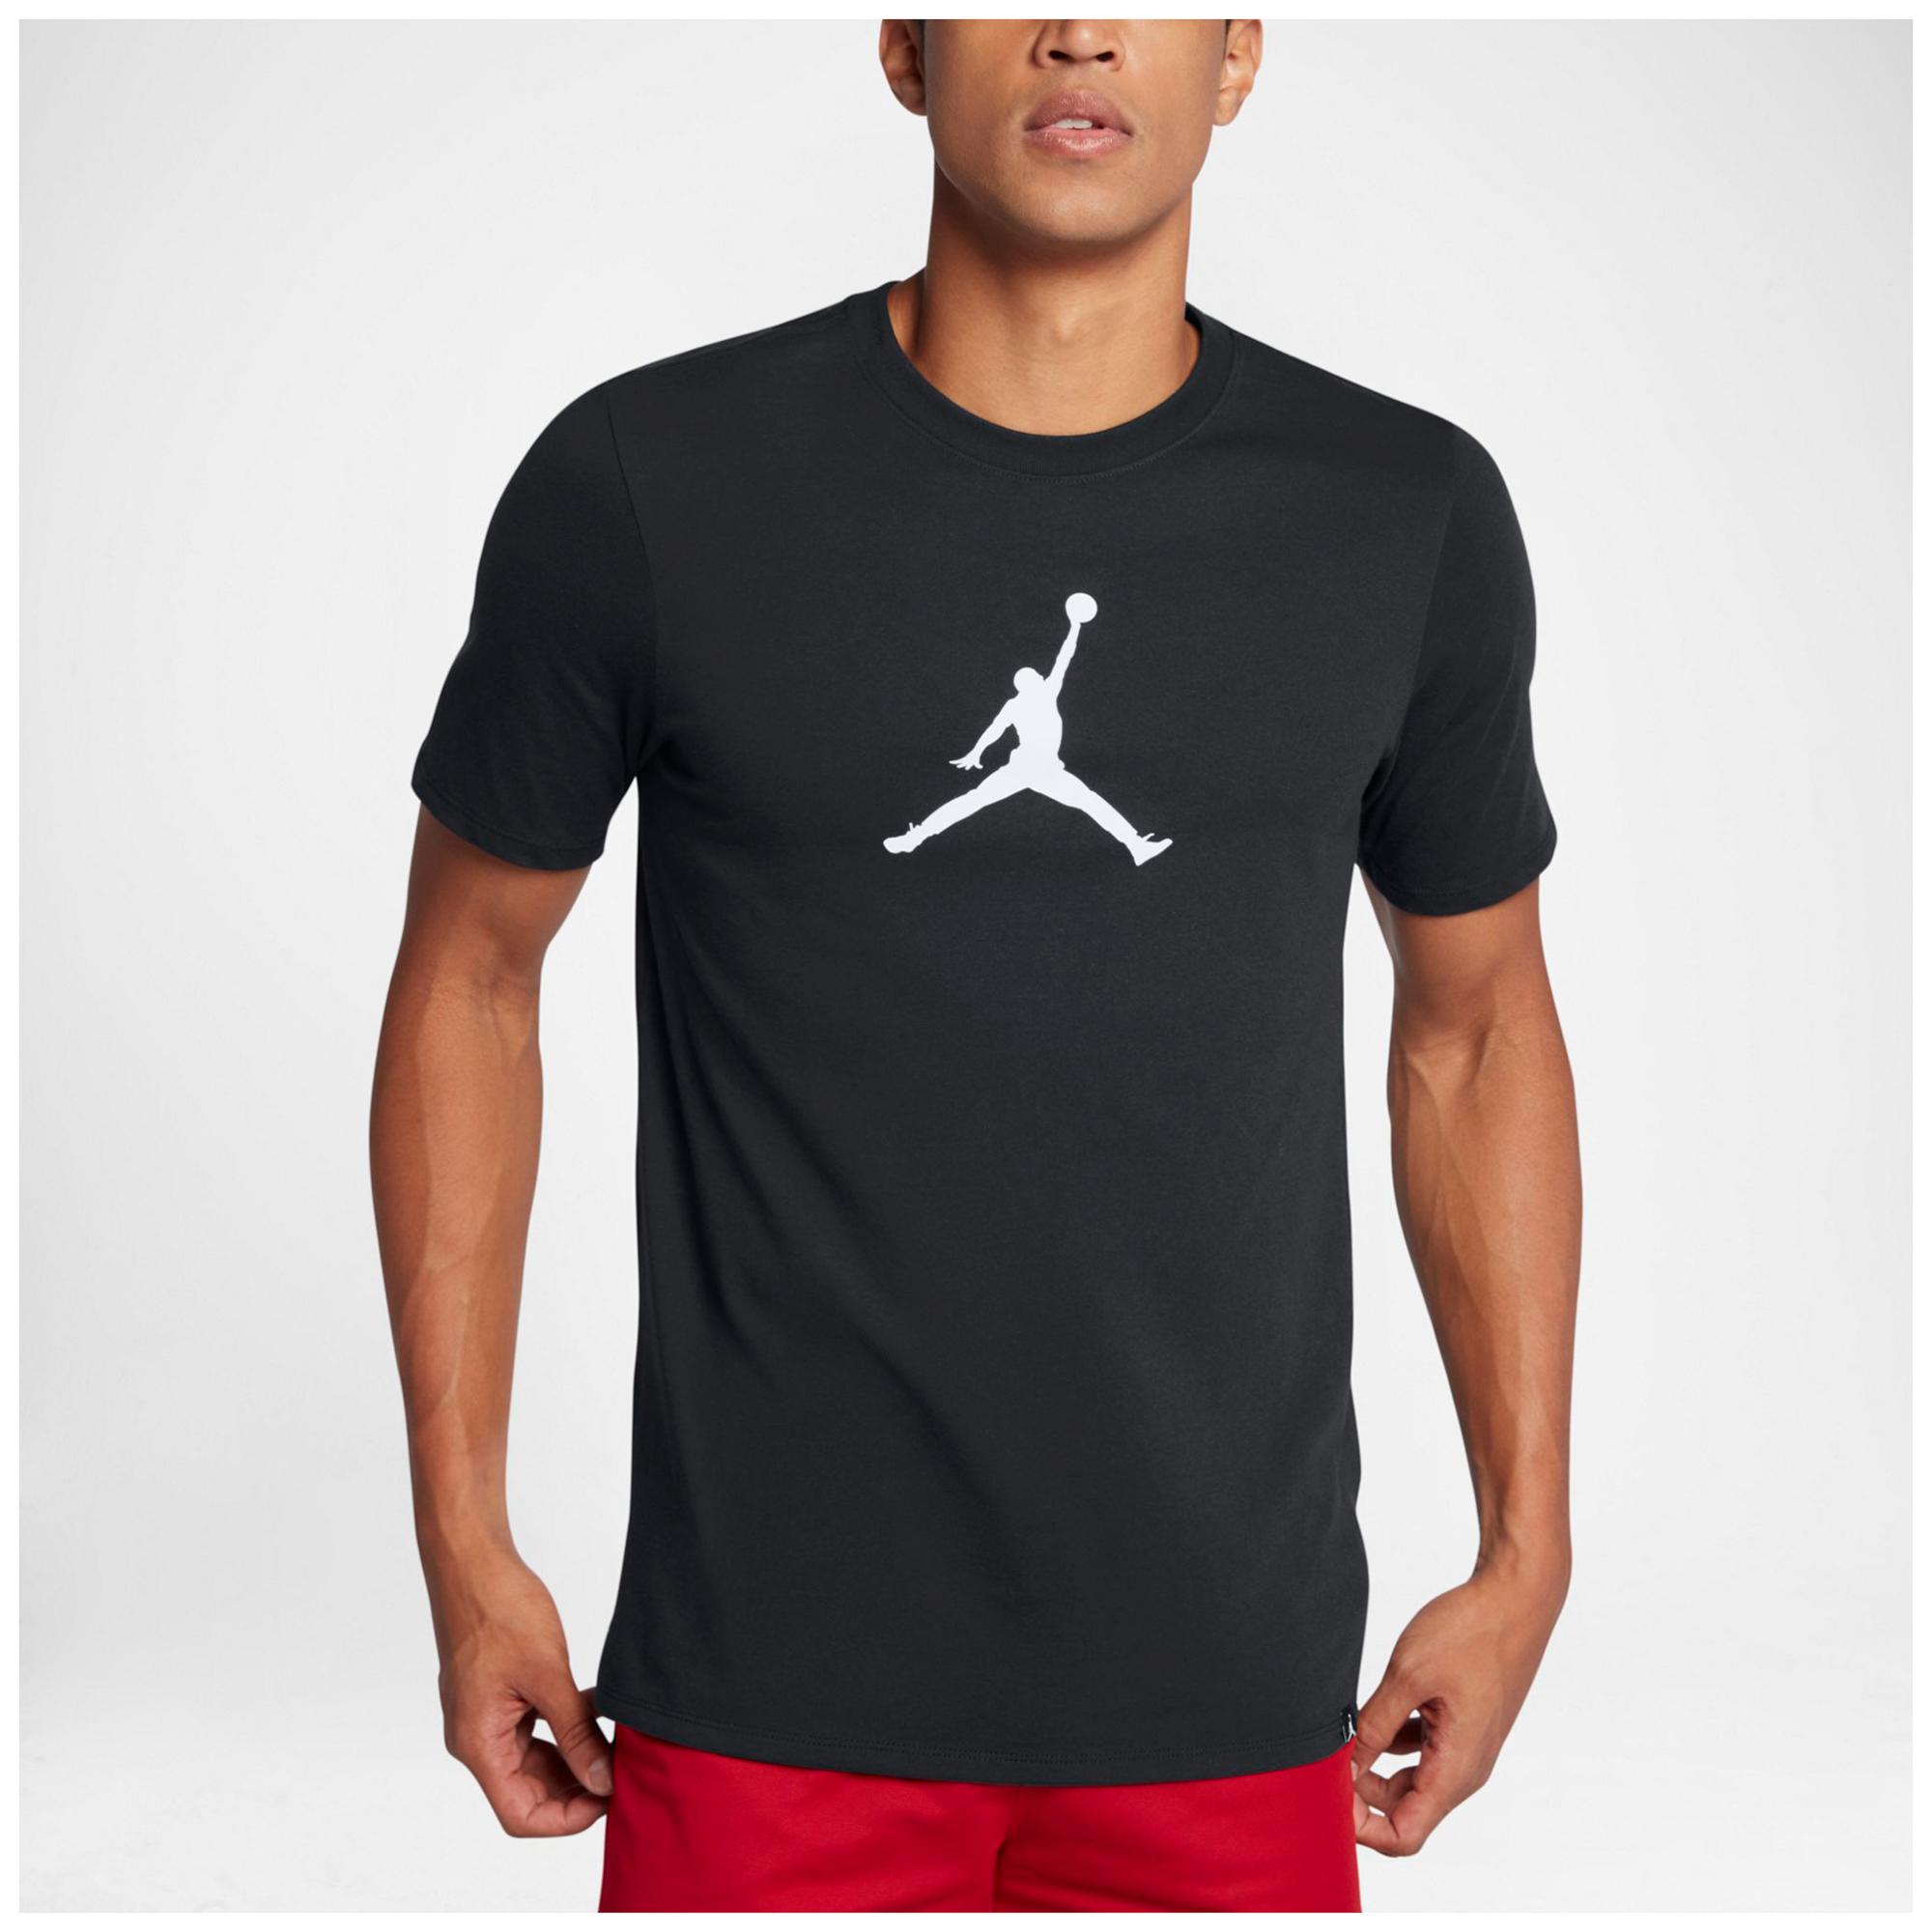 Nike Cotton 23/7 Jumpman T-shirt in Black/White (Black) for Men - Lyst